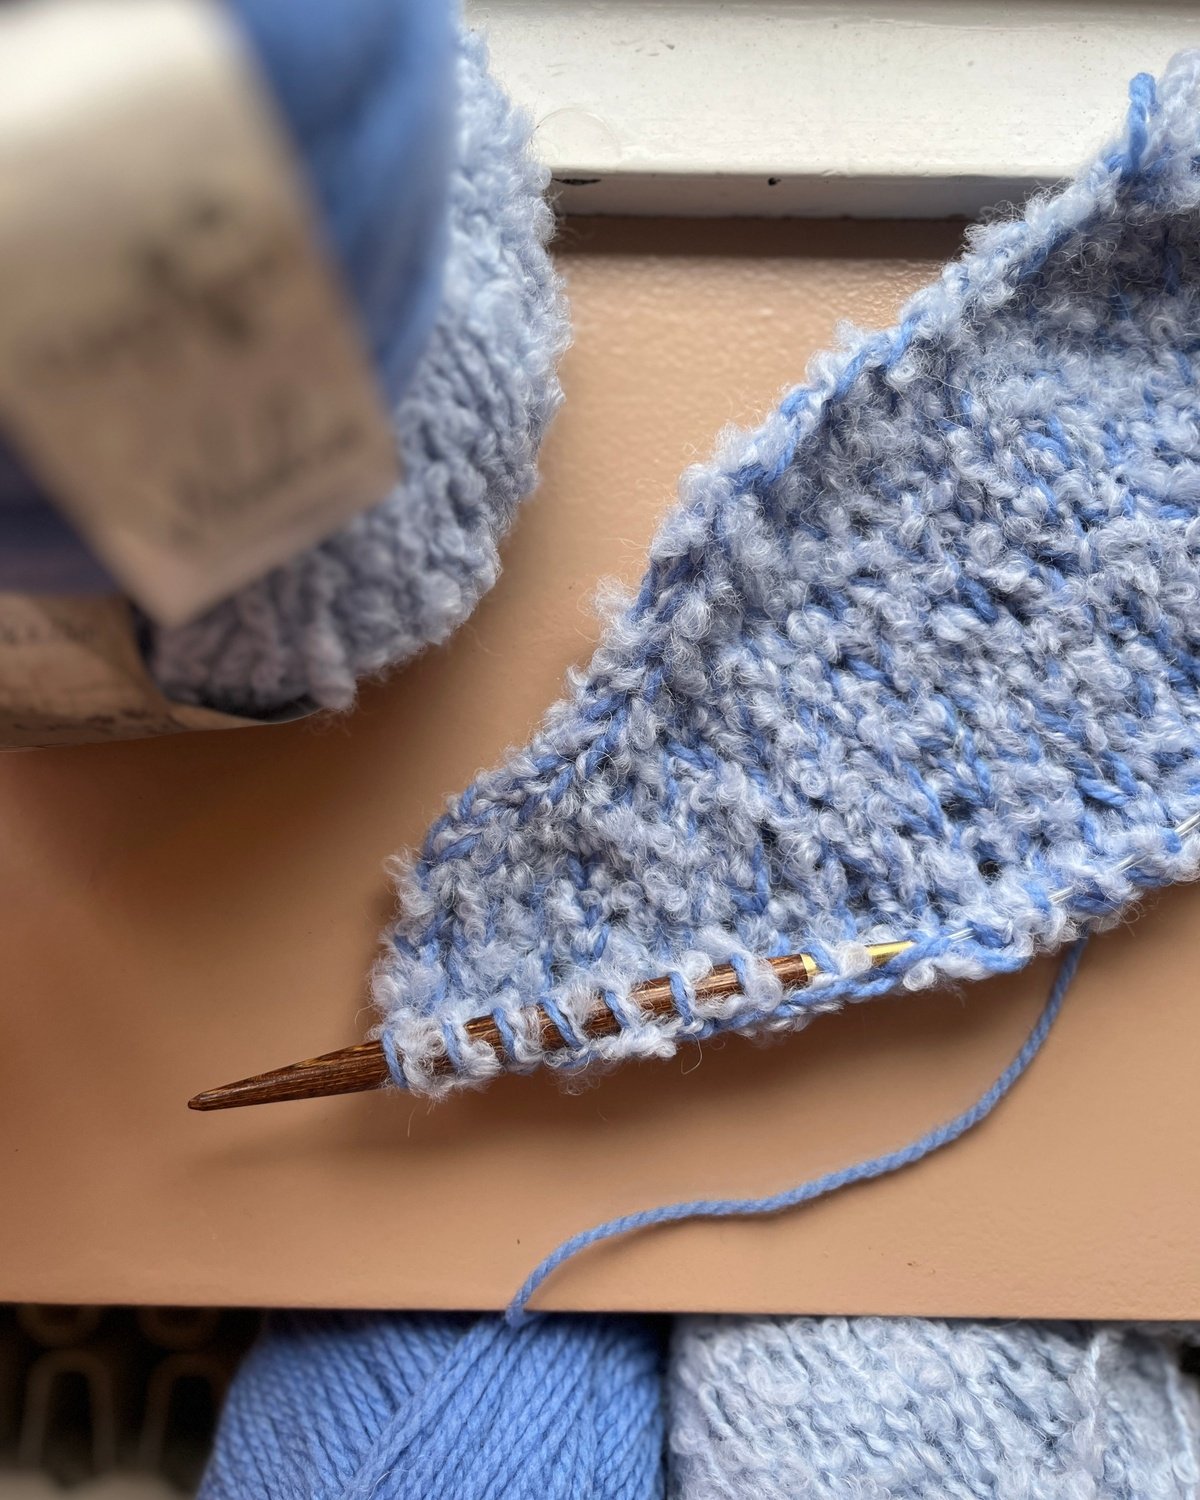 Juicy Sweater Junior English Popknit knitting pattern